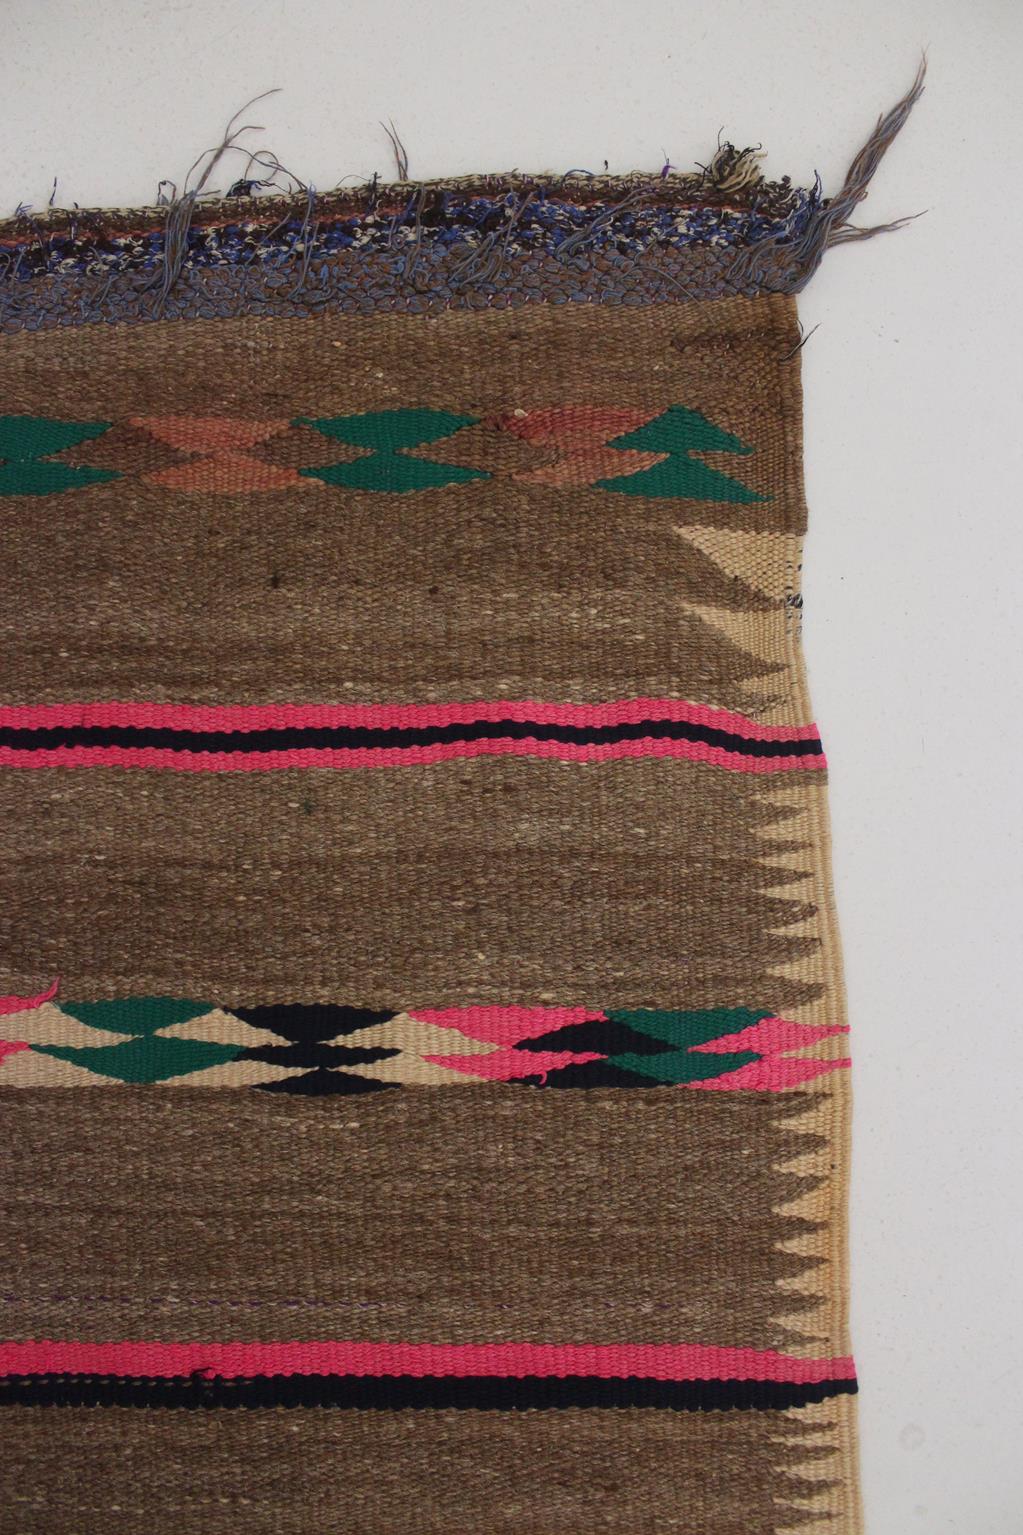 Berber blanket / Kilim 4.6x8.4feet / 140x258cm